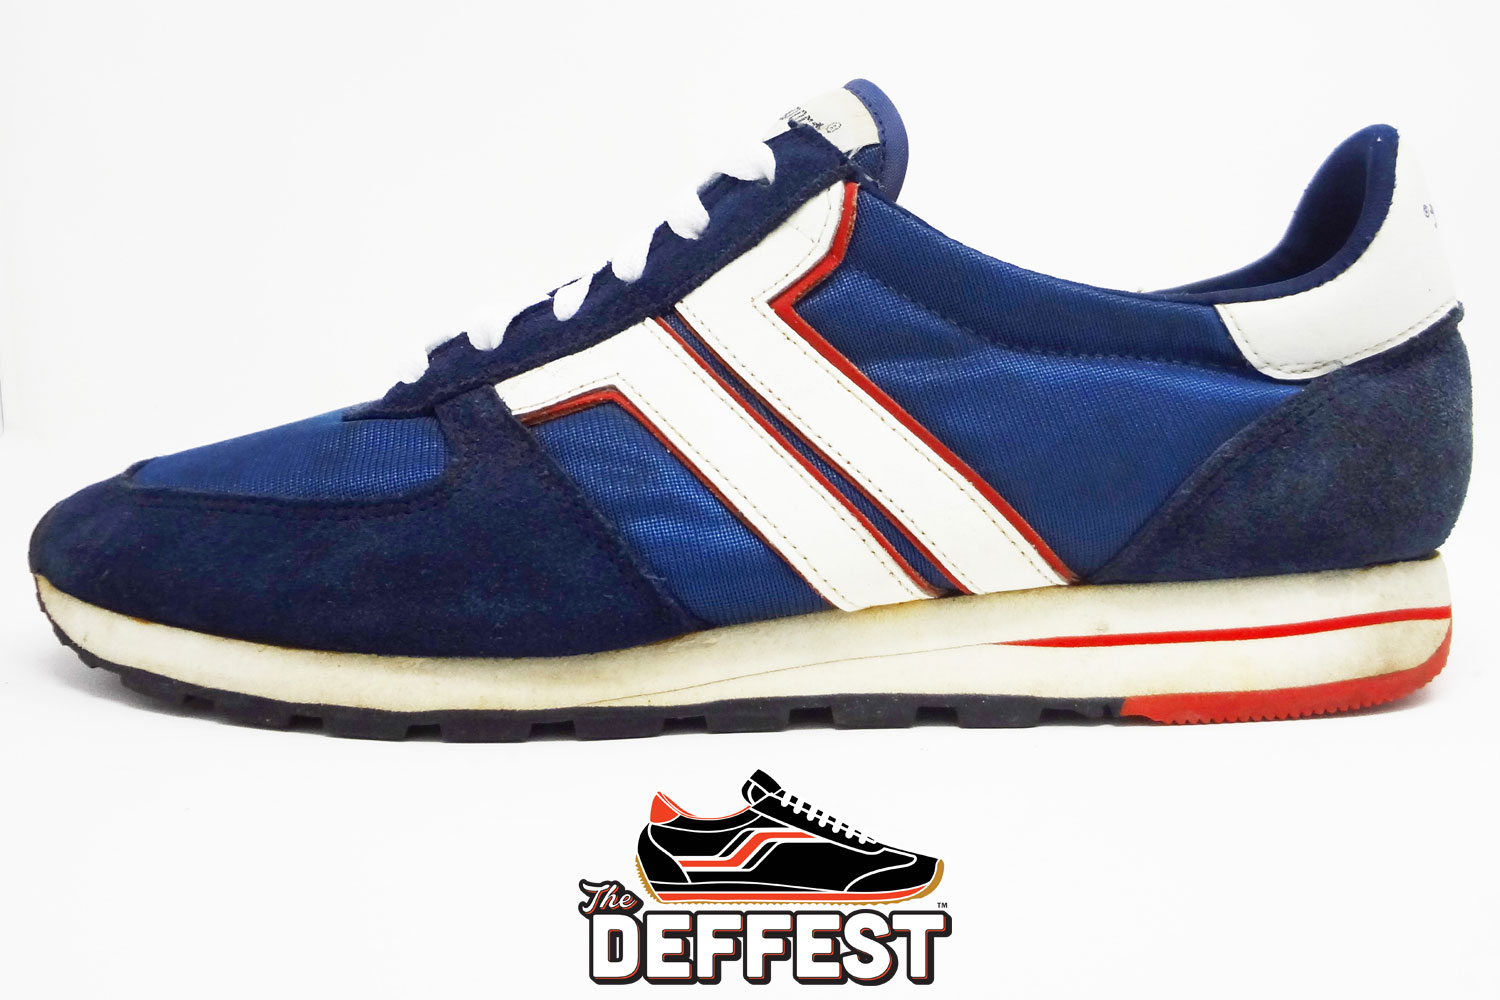 Topsport deadstock OG 80s vintage sneakers @ The Deffest